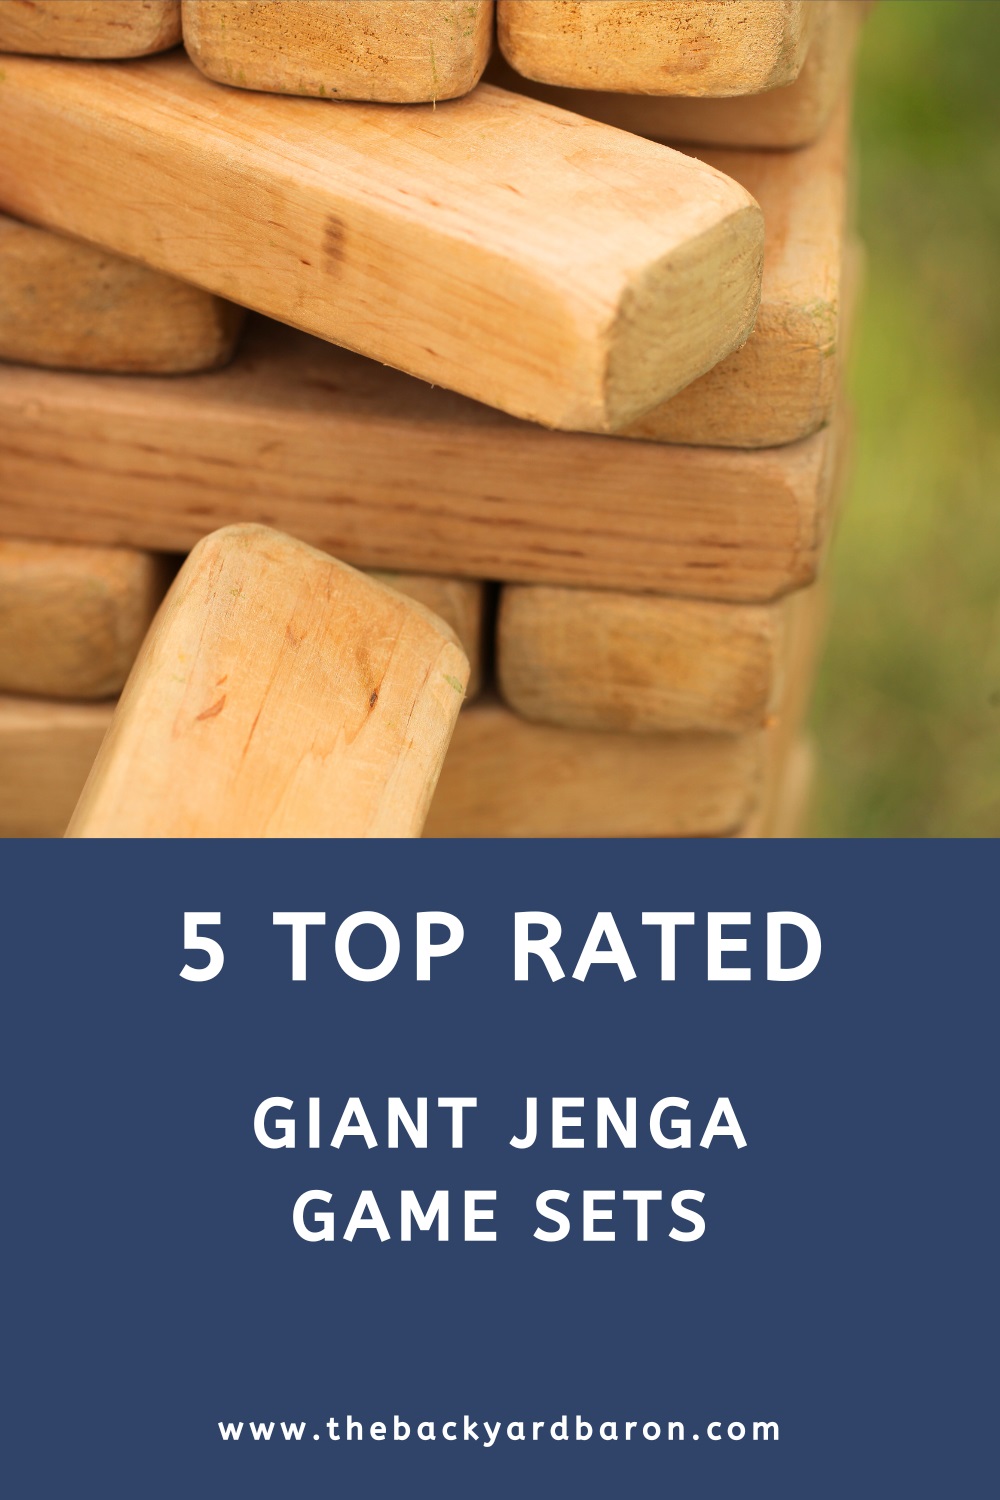 5 Top rated giant Jenga game sets